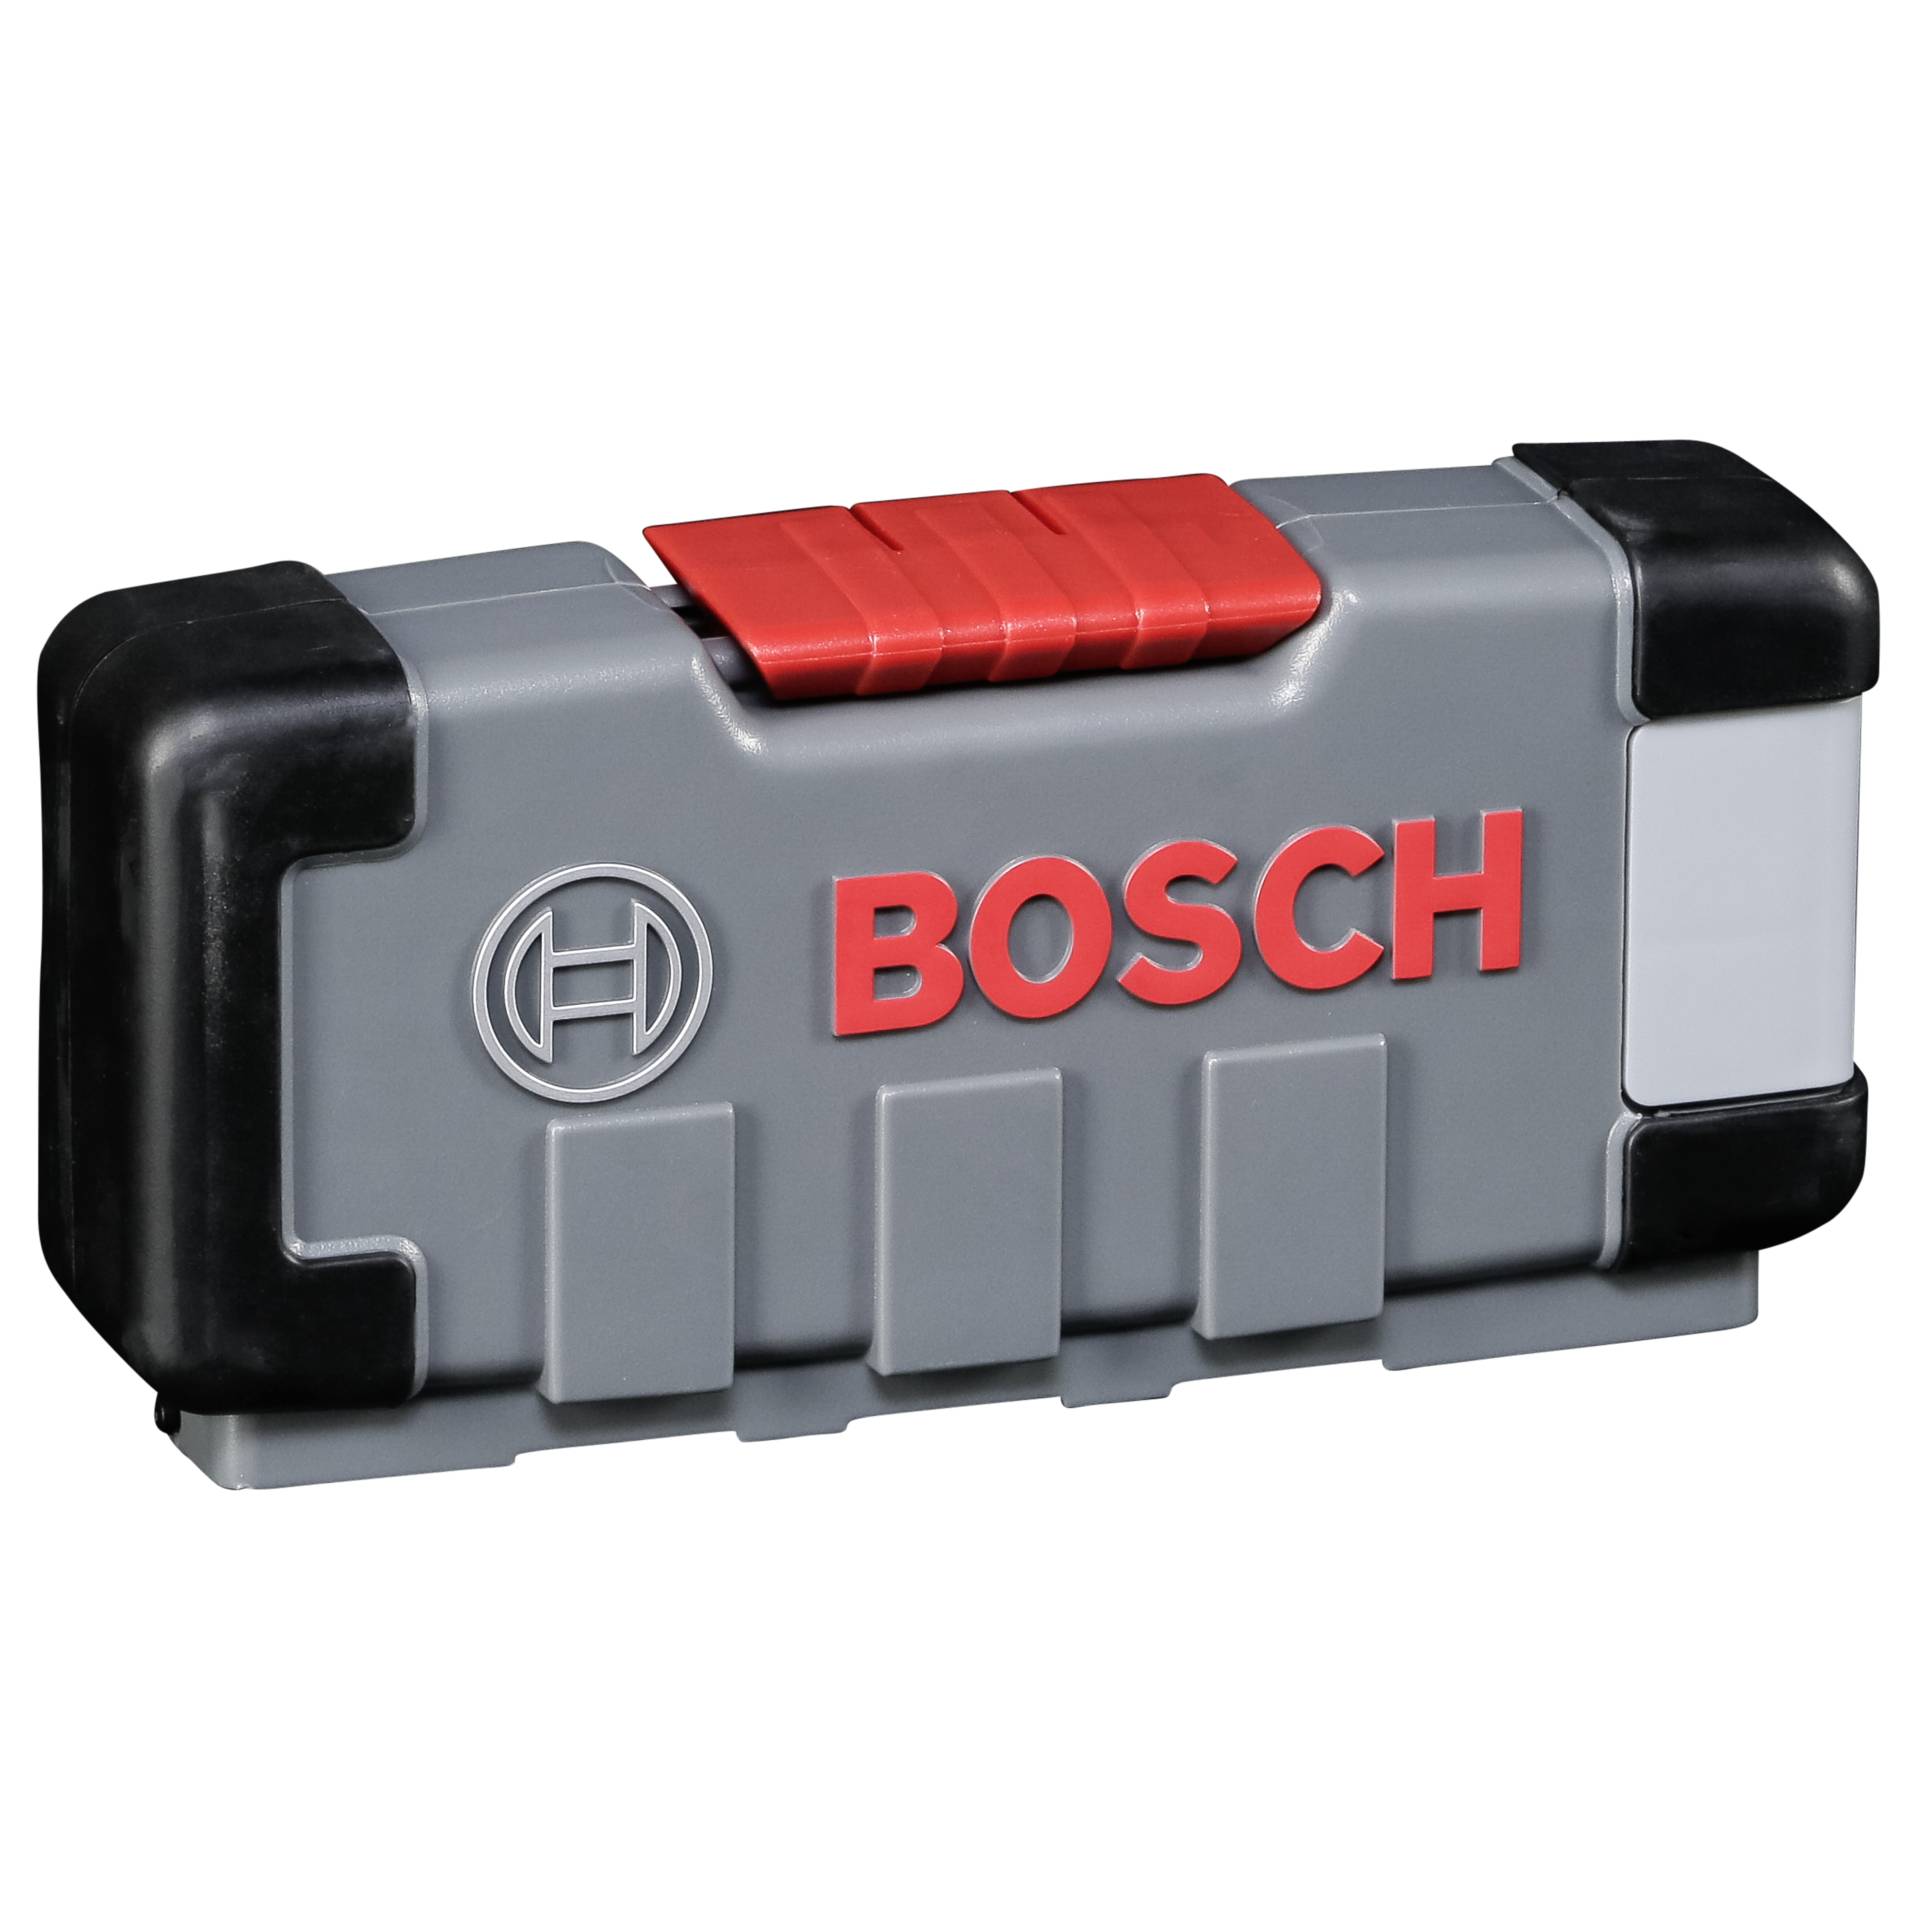 Bosch 2 607 010 903 Sägeblatt für Stichsägen, Laubsägen & elektrische Sägen Stichsägeblatt 30 Stück(e)